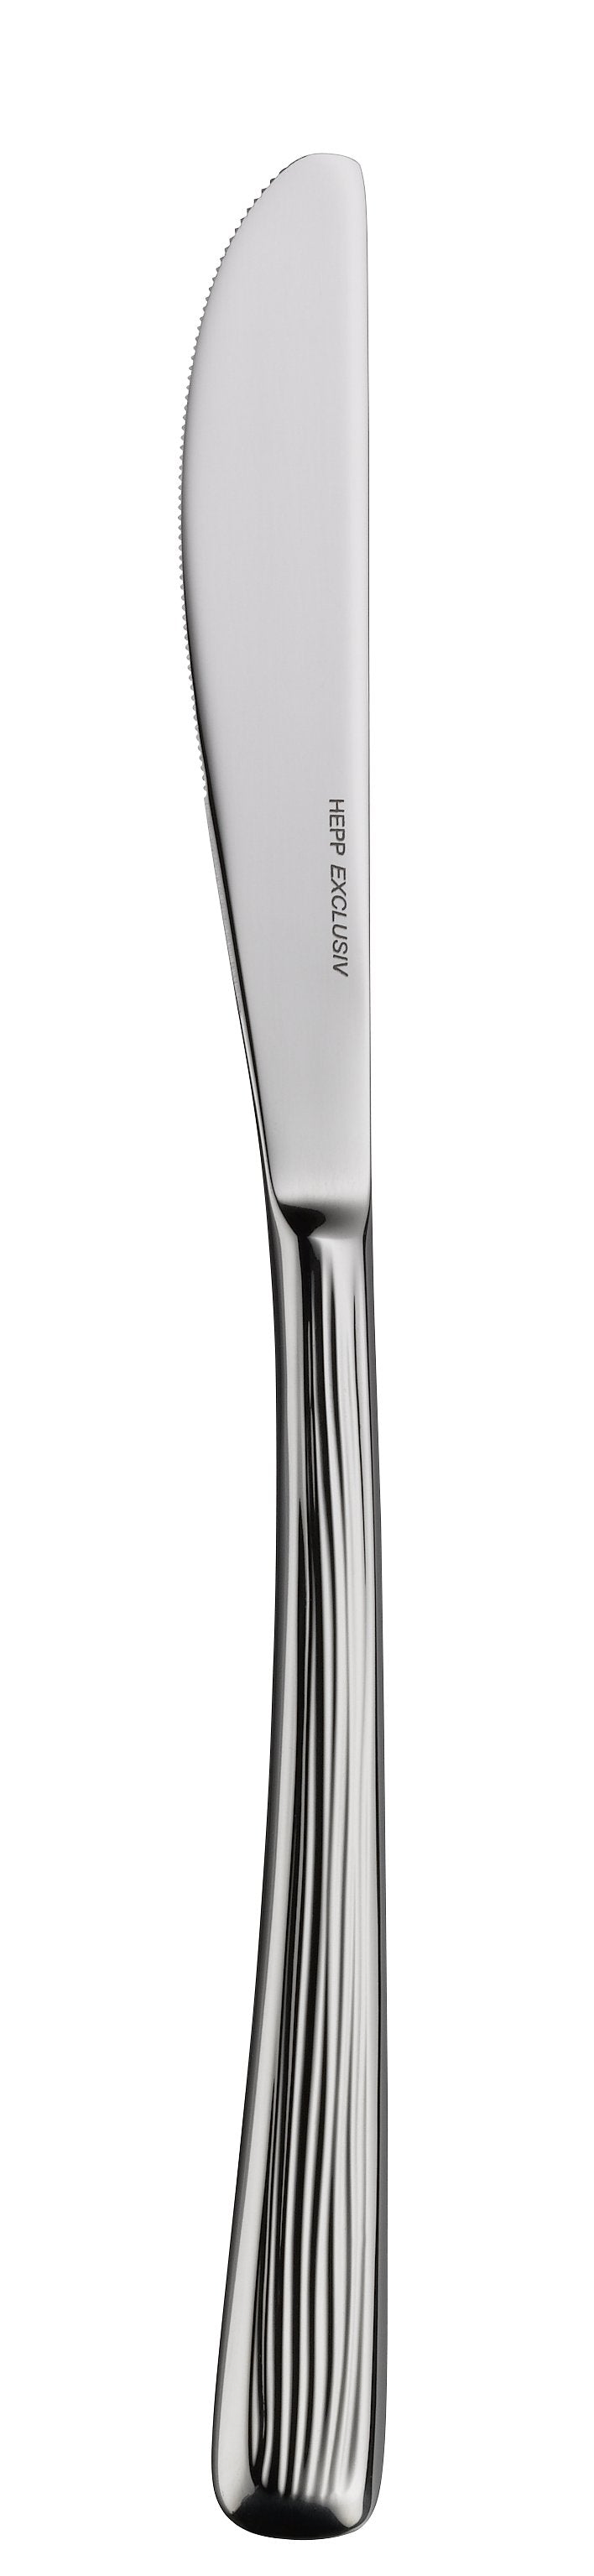 Table knife MB MESCANA 237mm